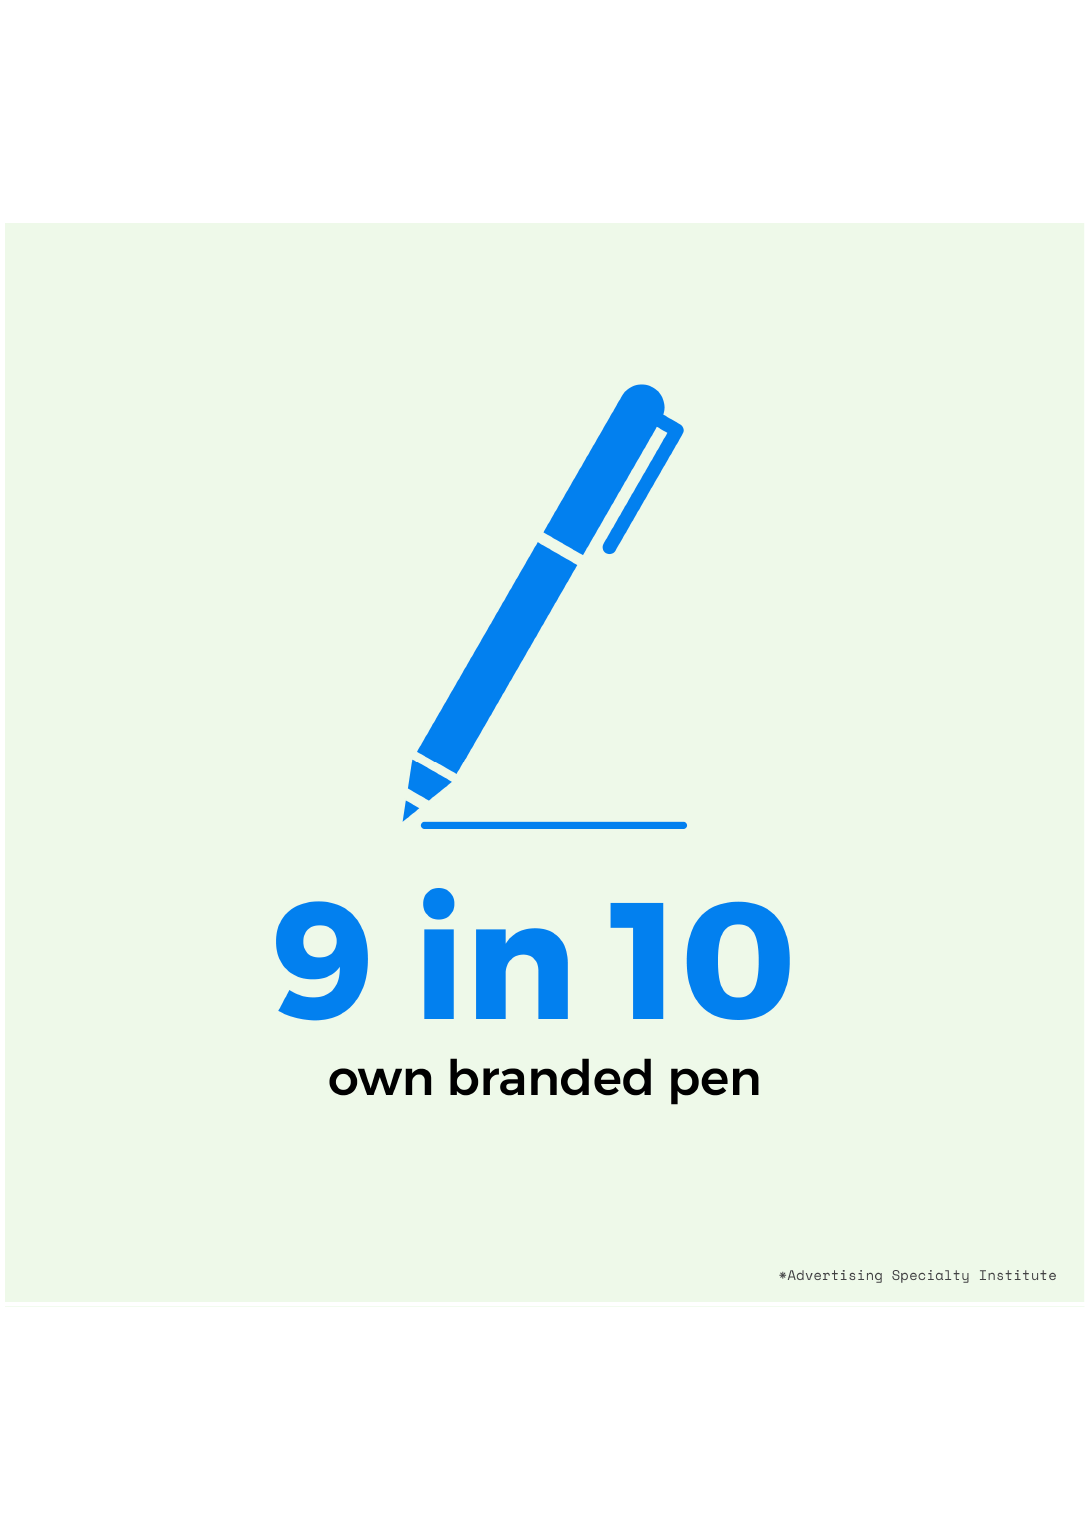 9 in 10 own branded pen